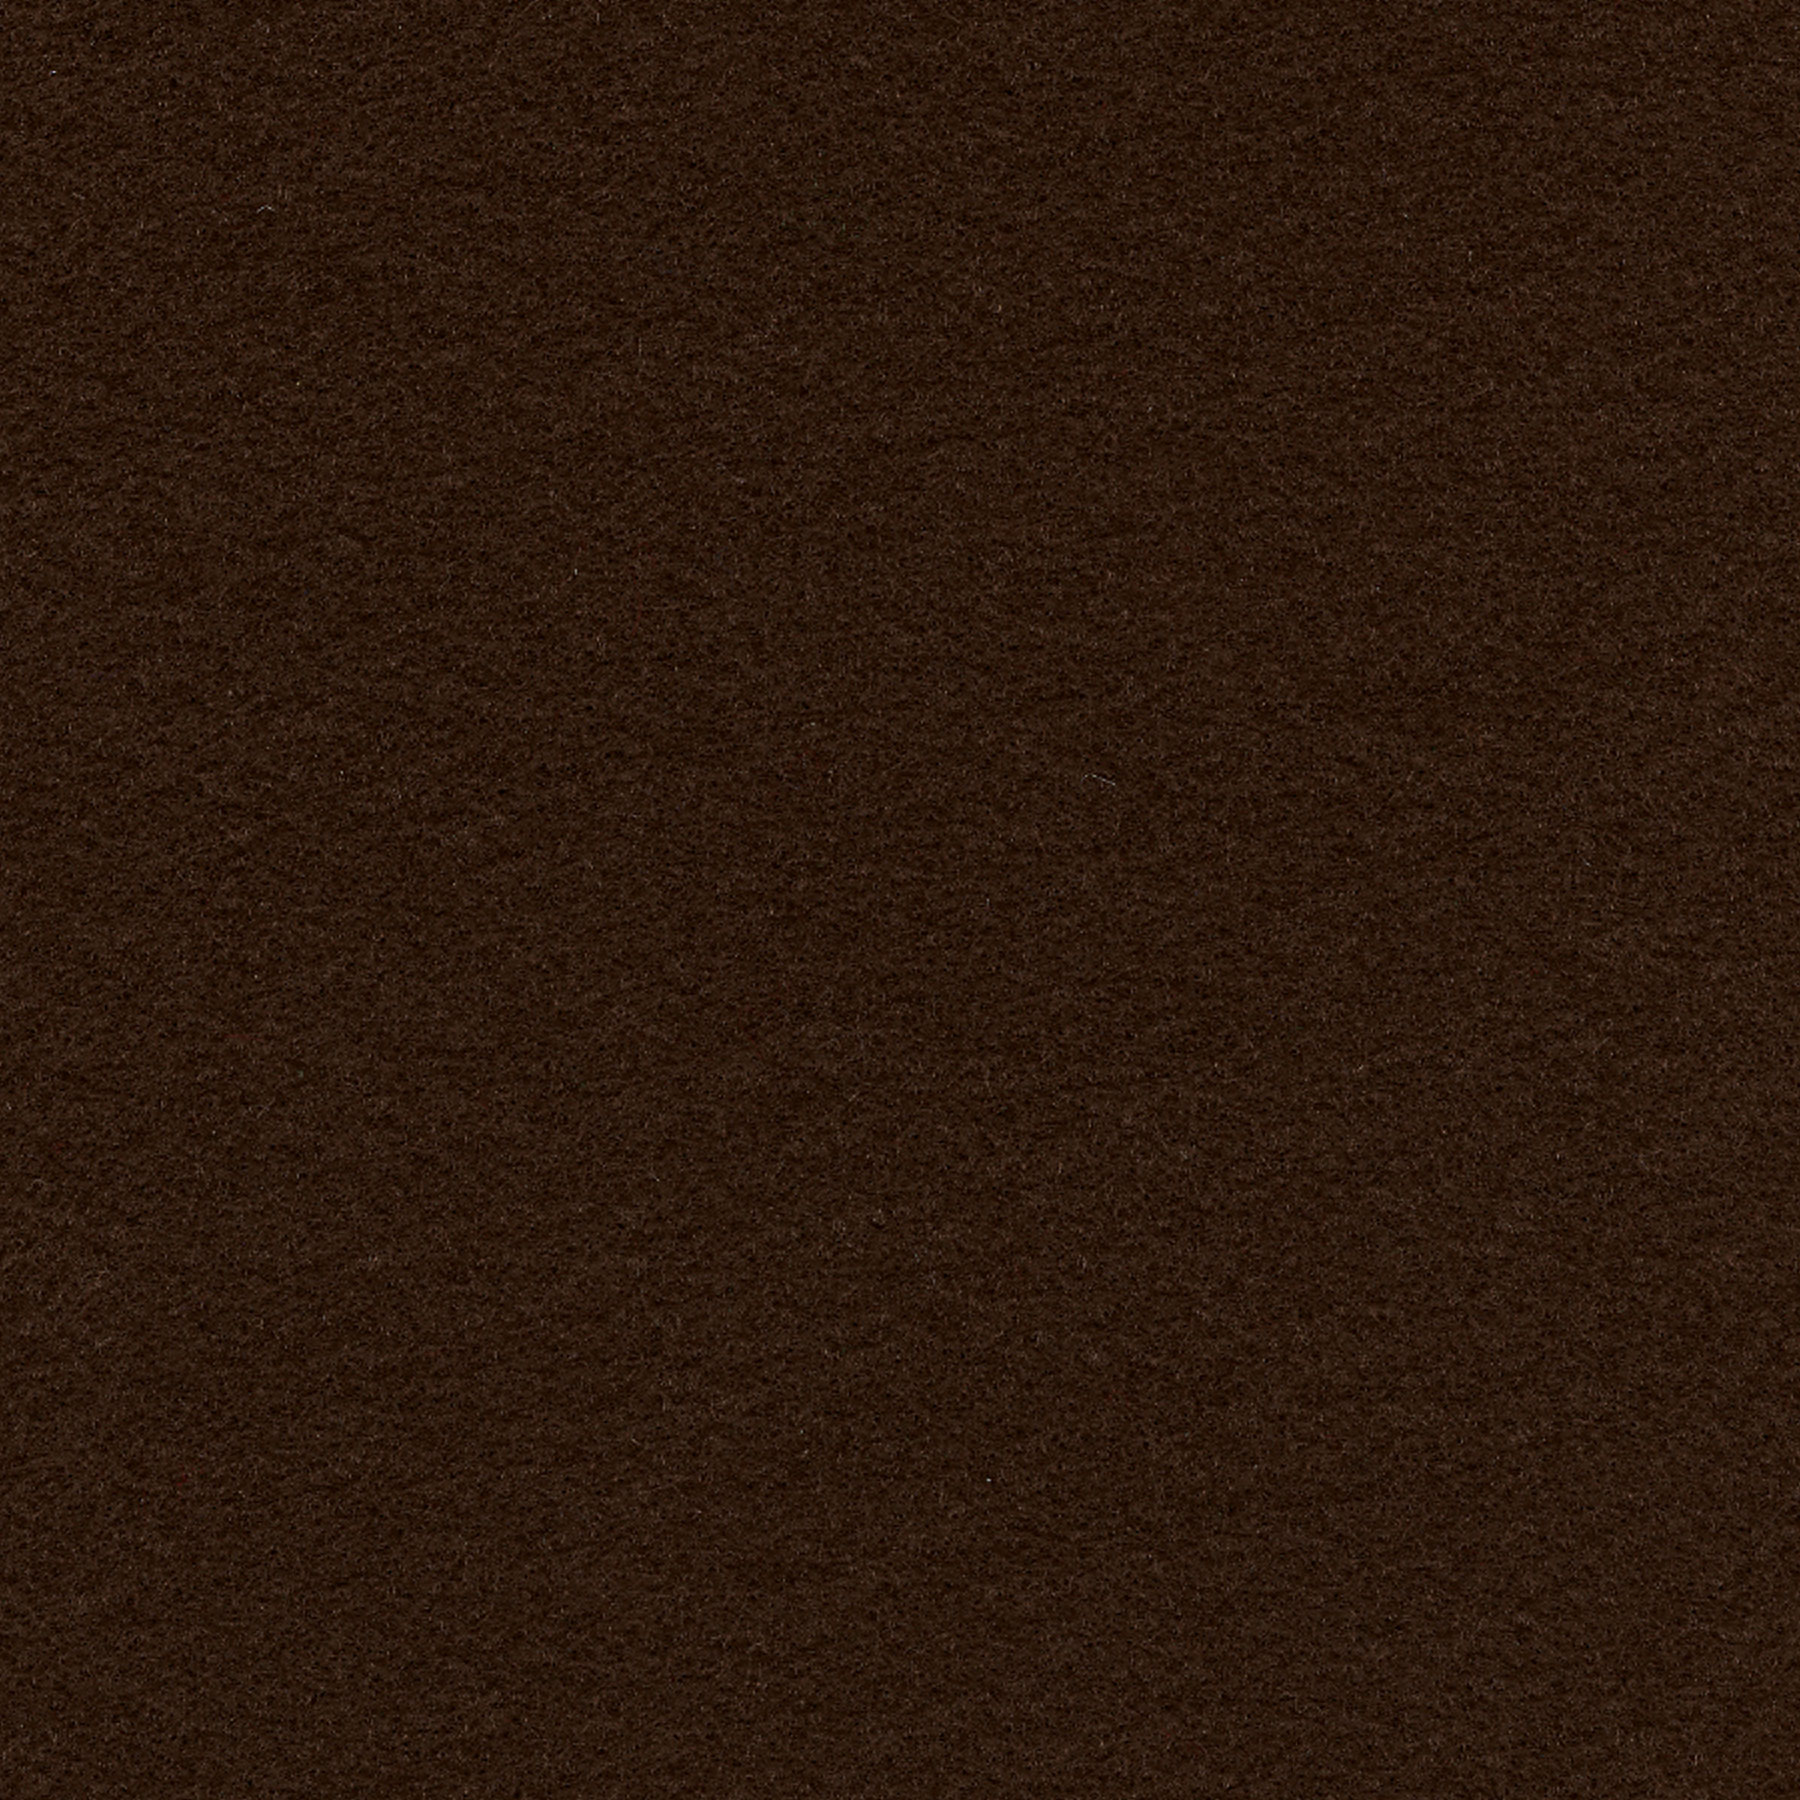 851-Cocoa Brown